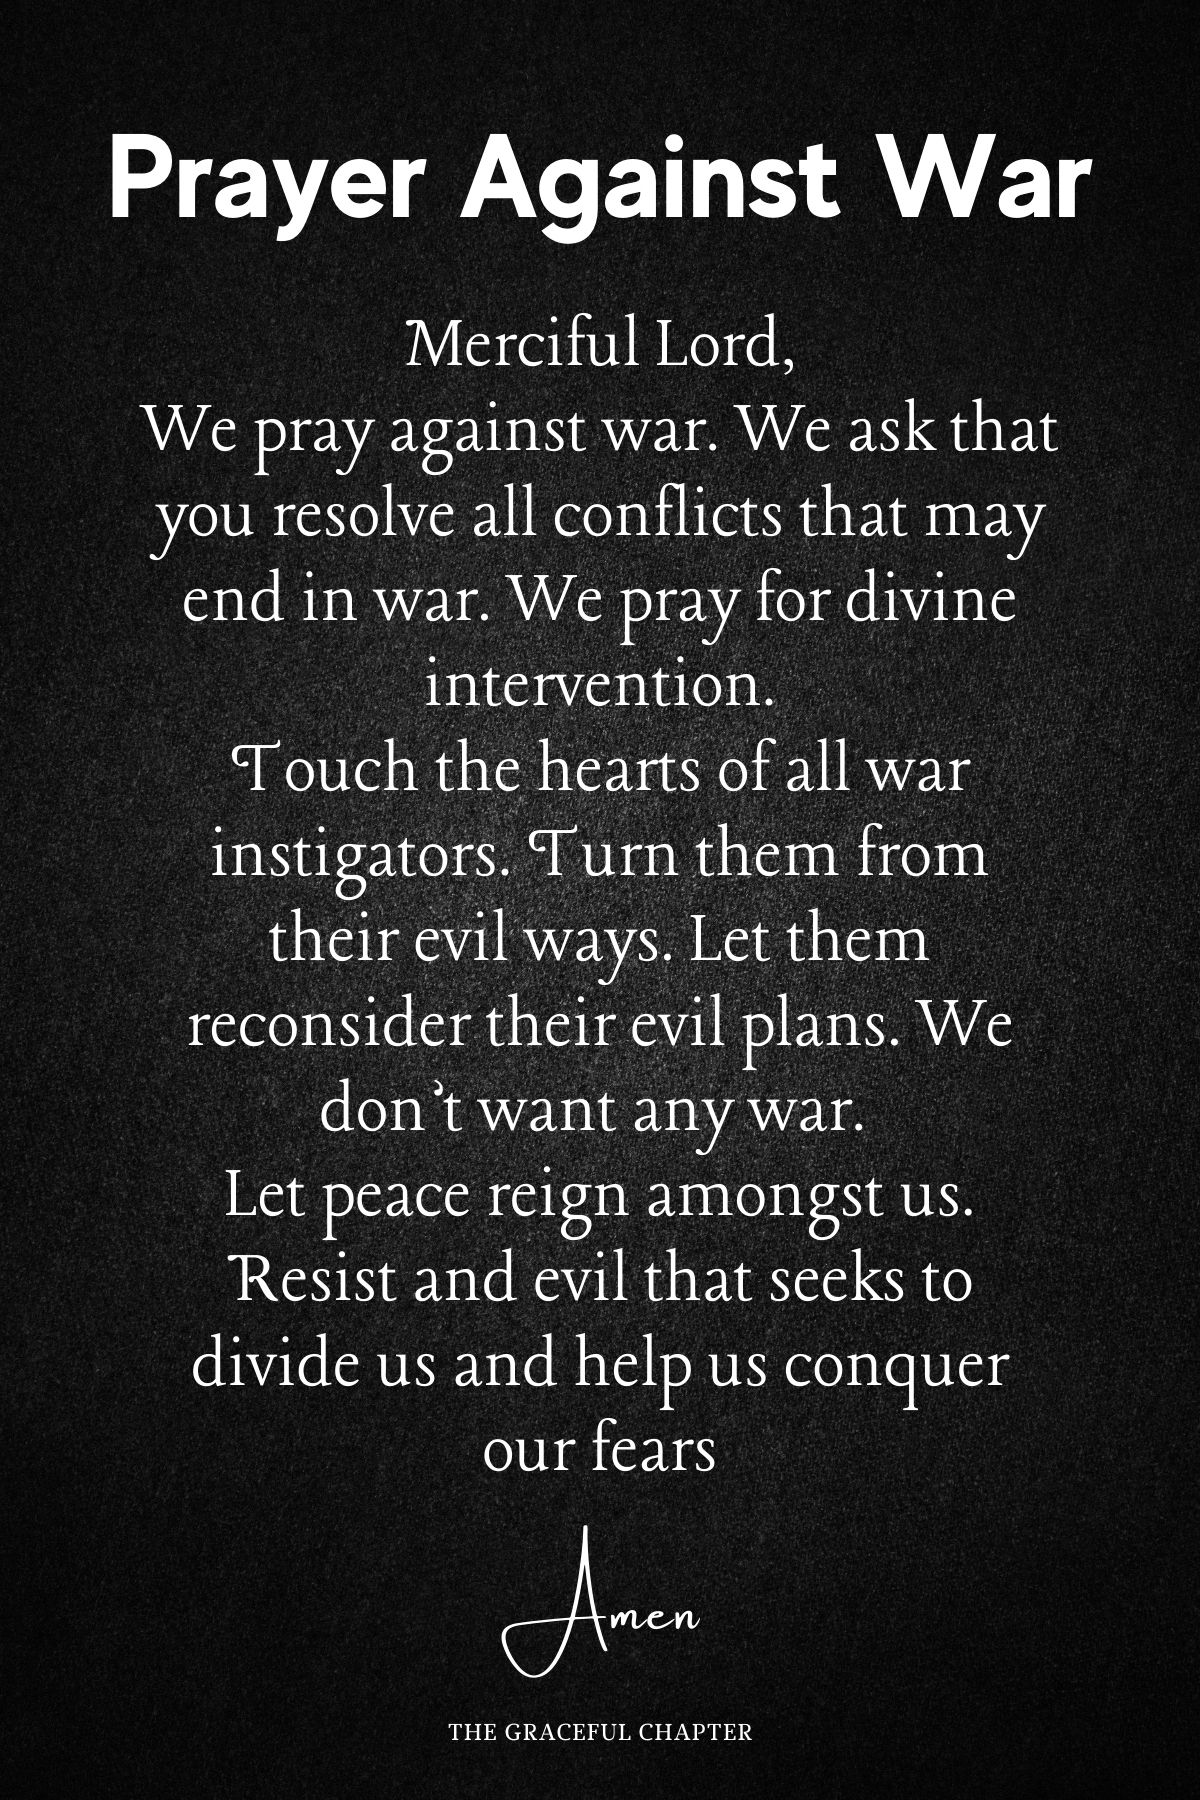 Prayer against war